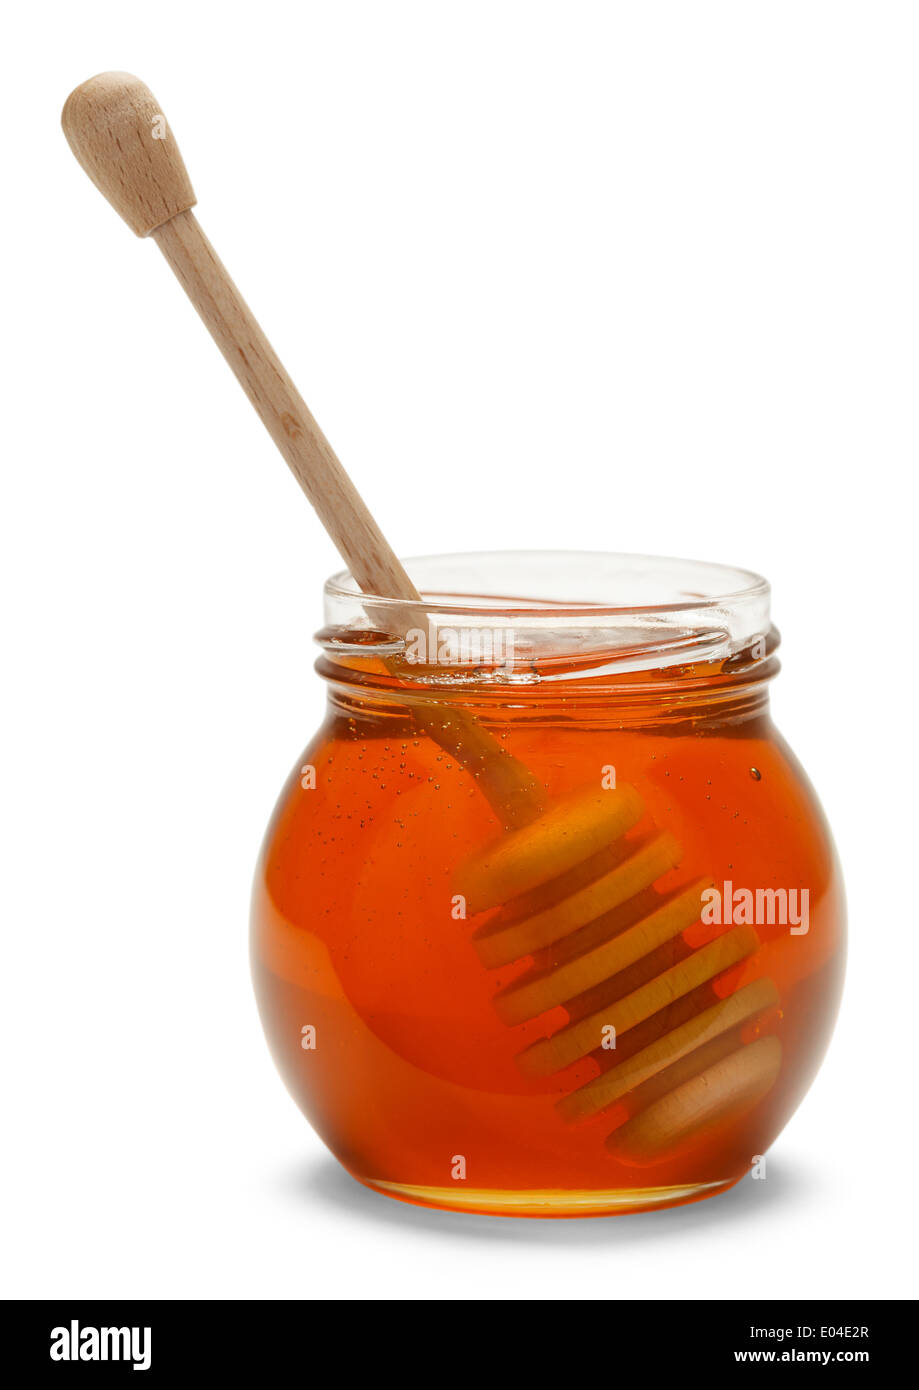 Honig-Glas mit Holz Dipper, Isolated on White Background. Stockfoto